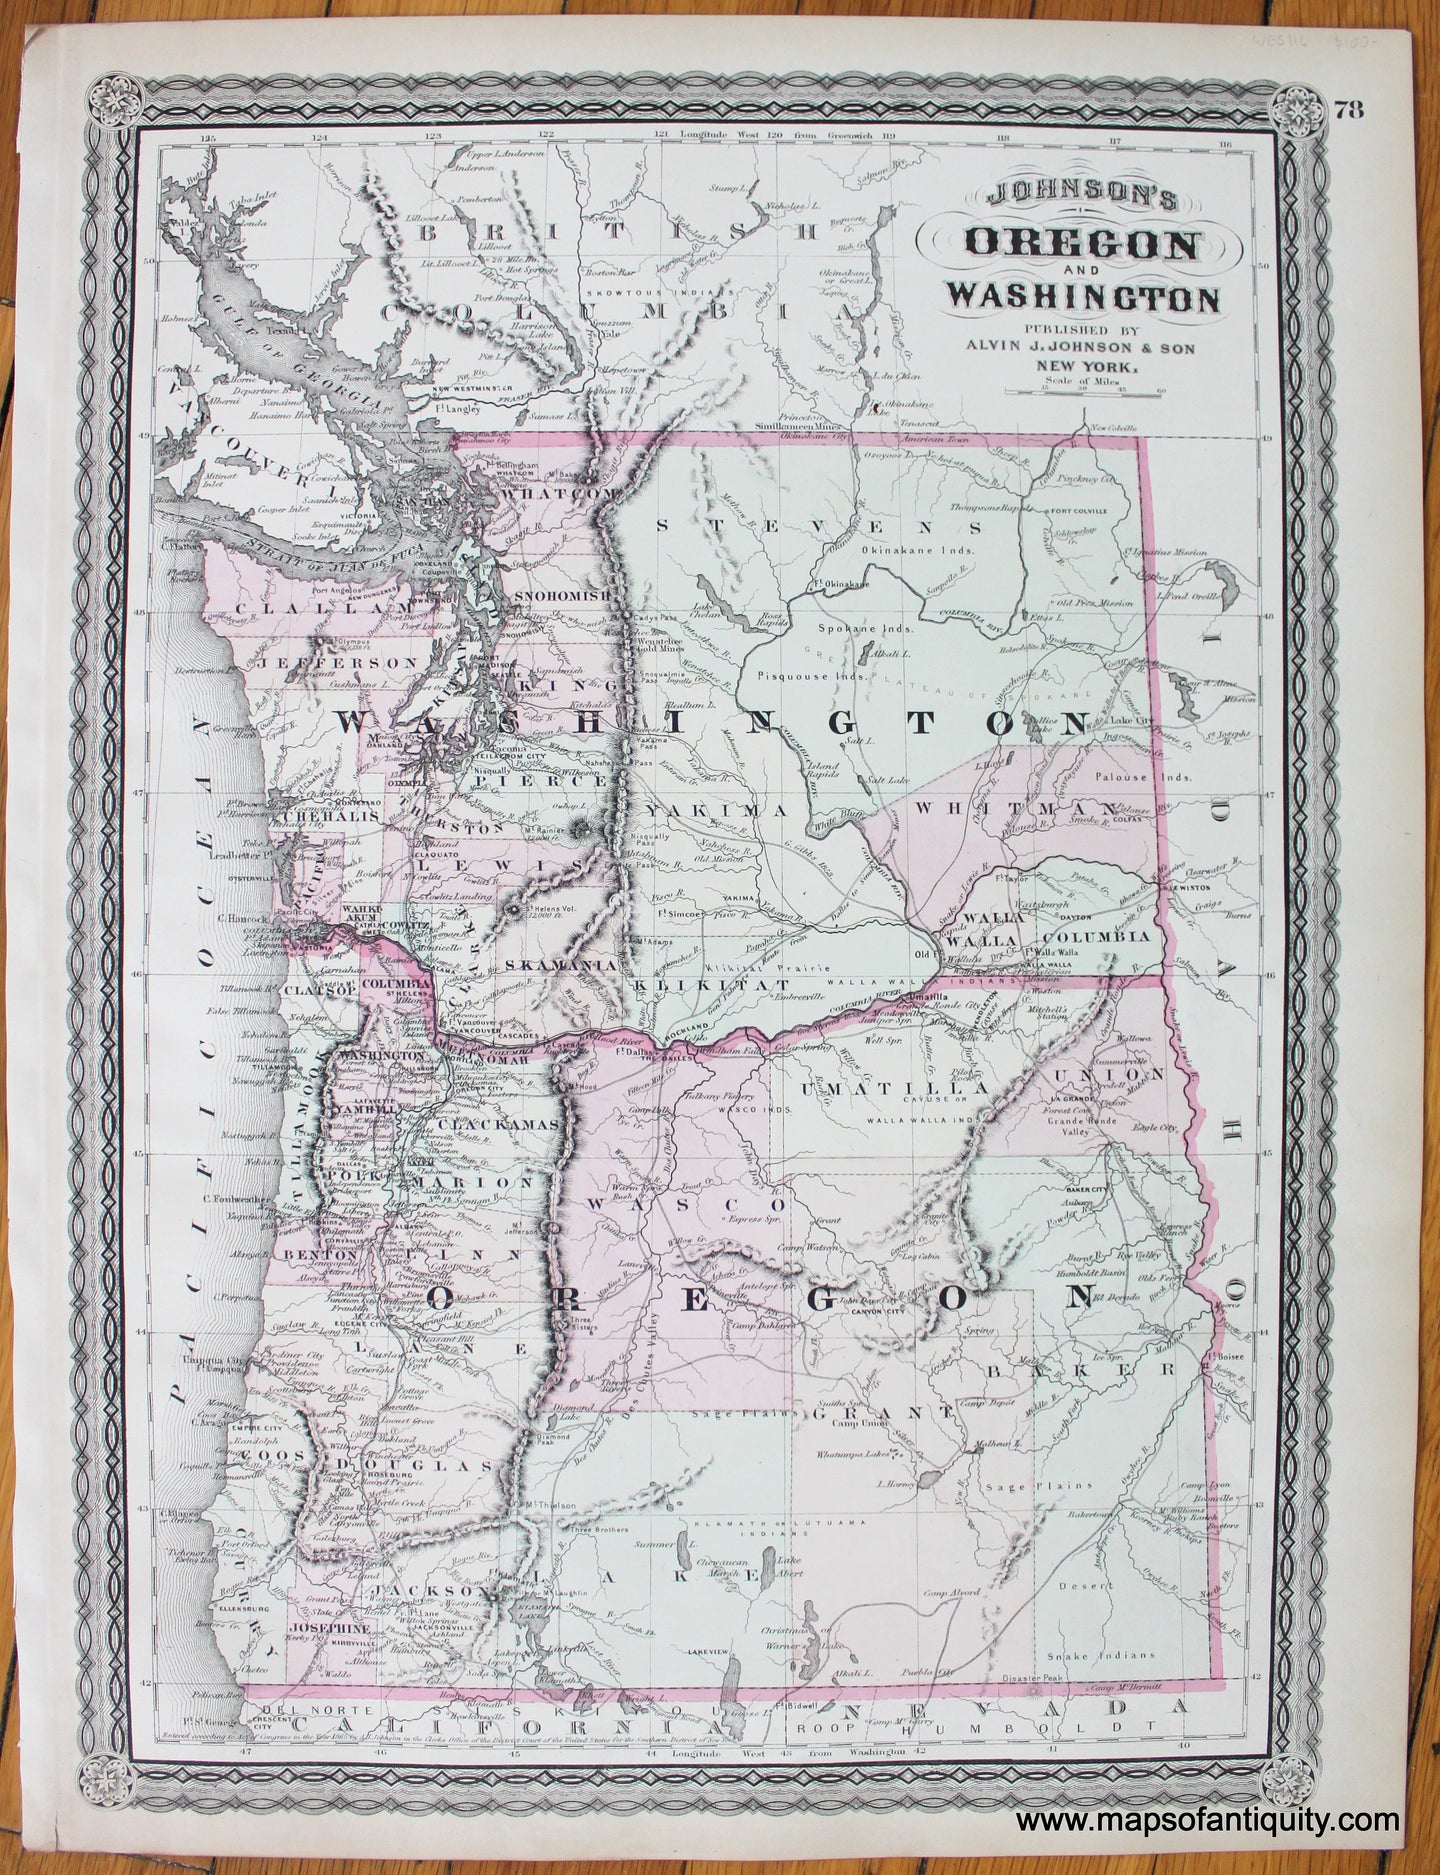 Antique-Map-Oregon-and-Washington-Johnson-1880-1800s-19th-century-Maps-of-Antiquity